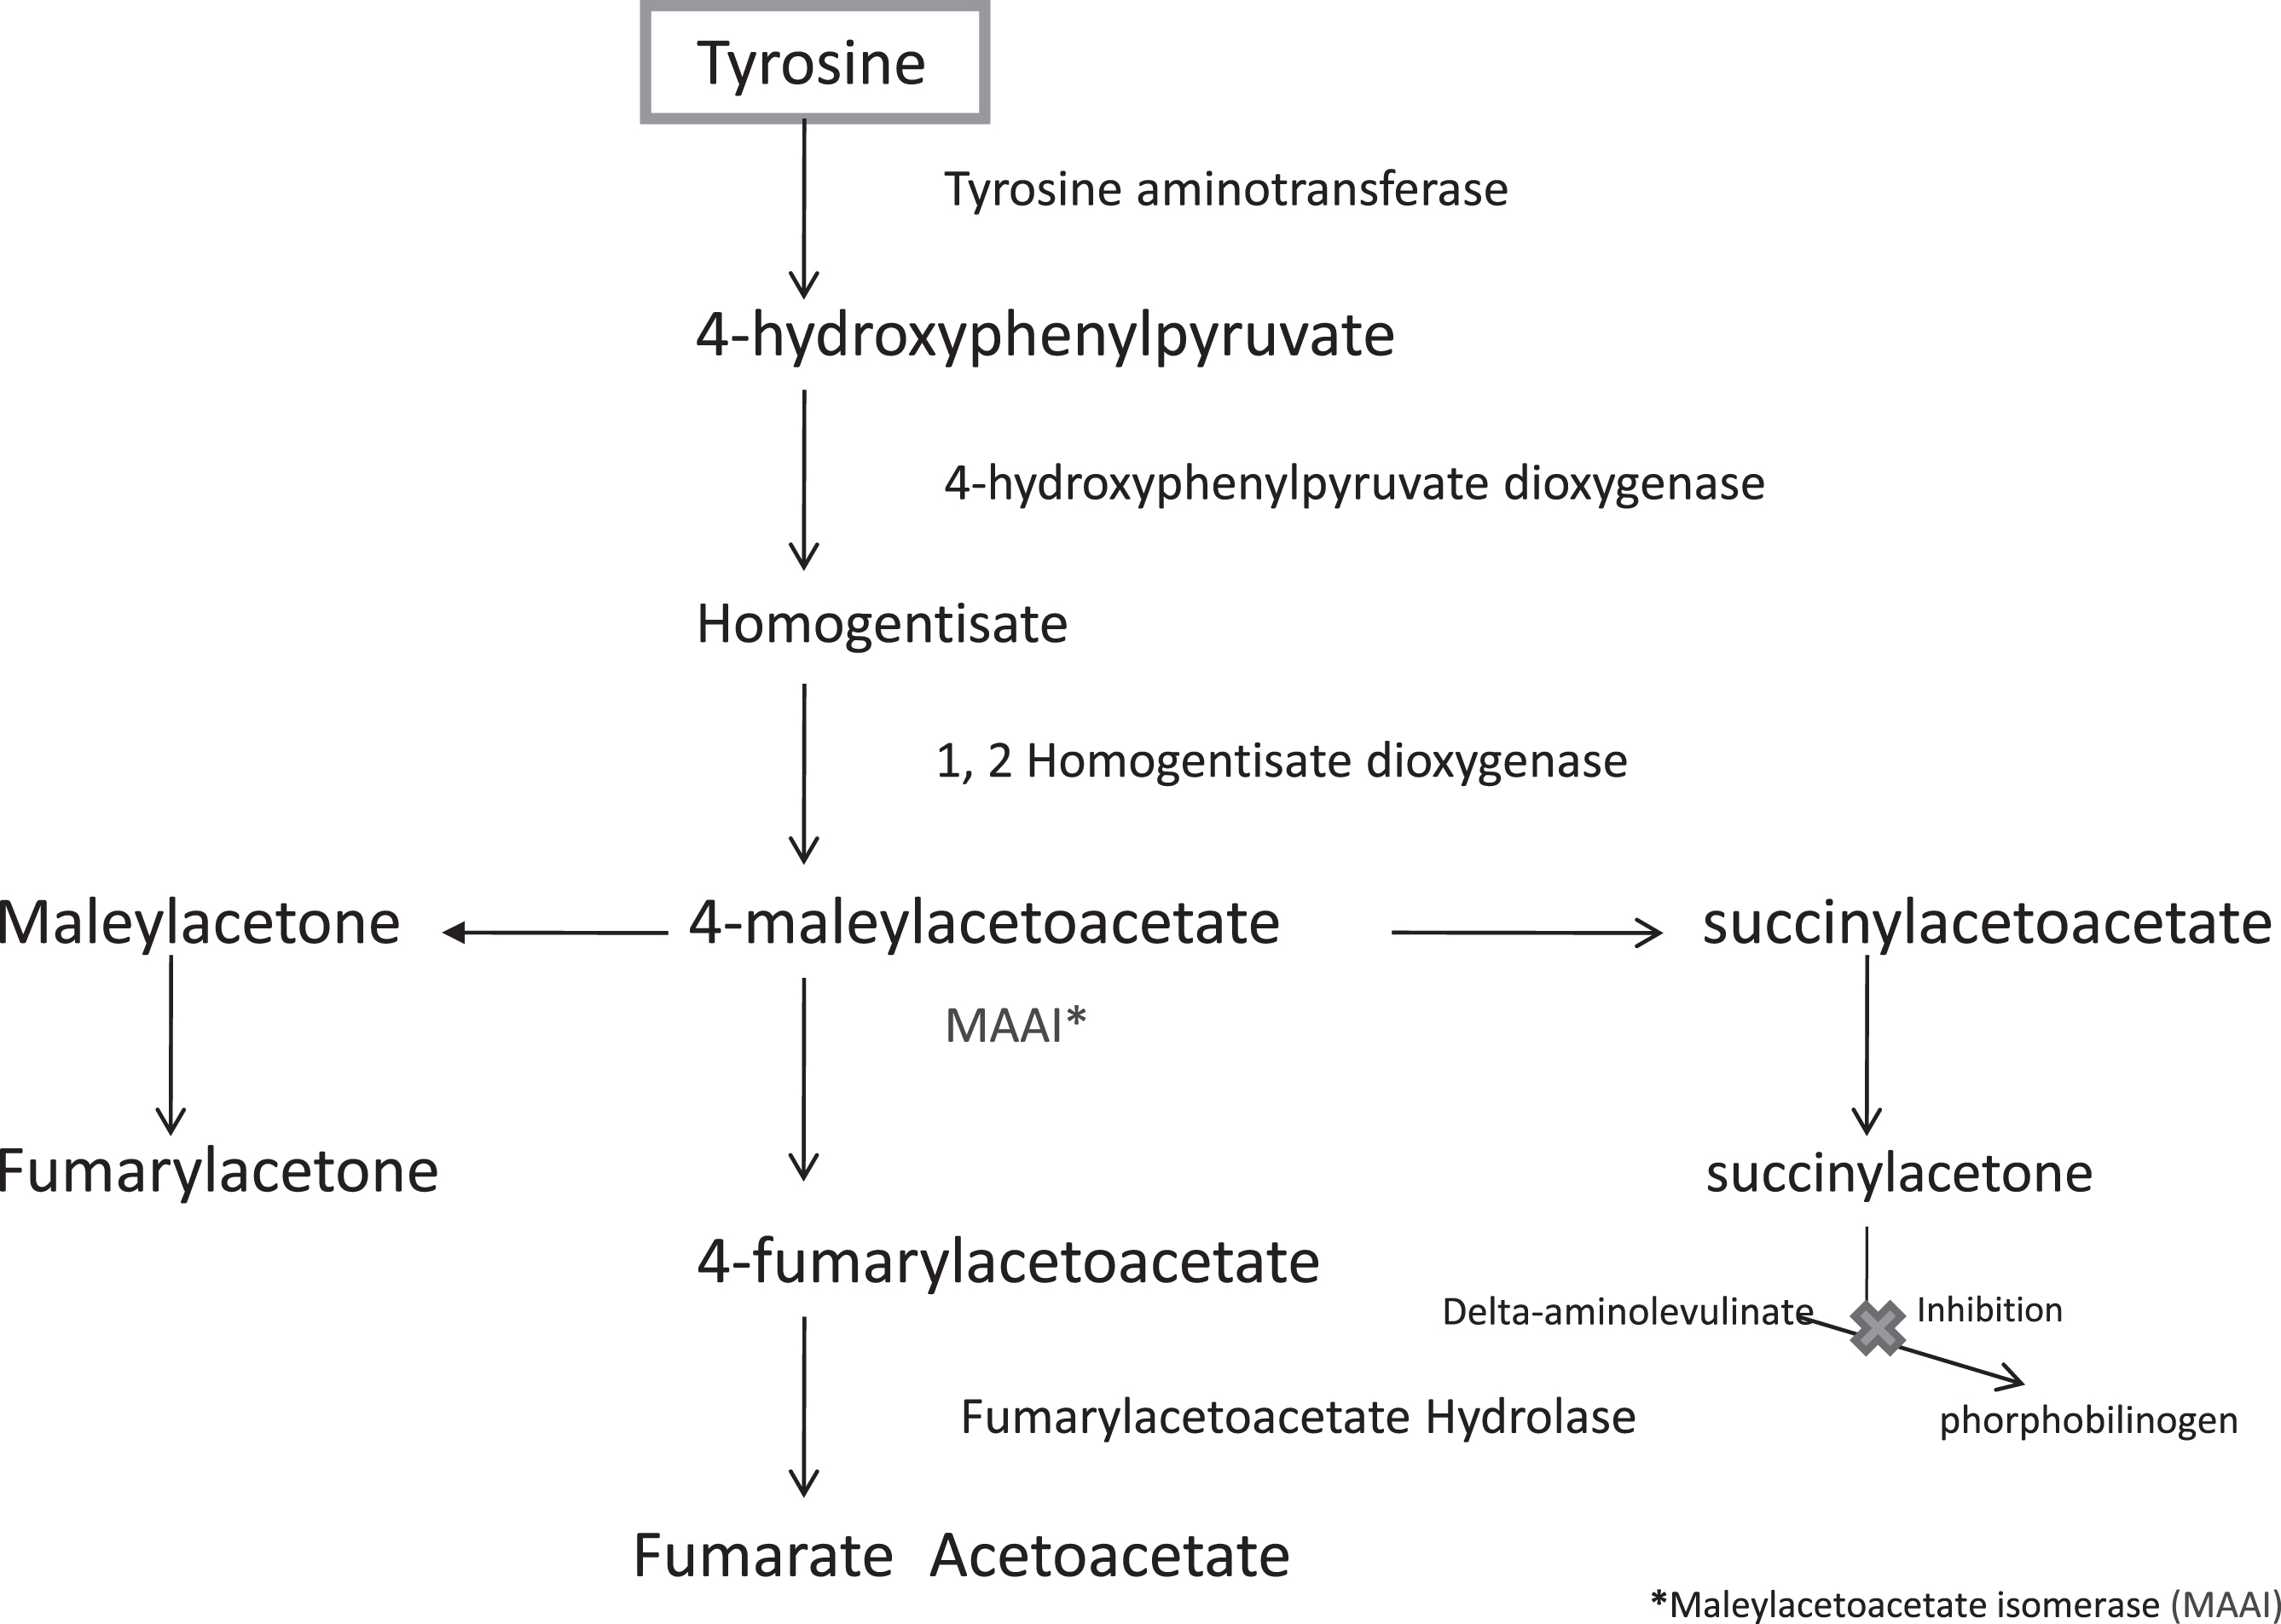 The Metabolic Pathway of Tyrosine.